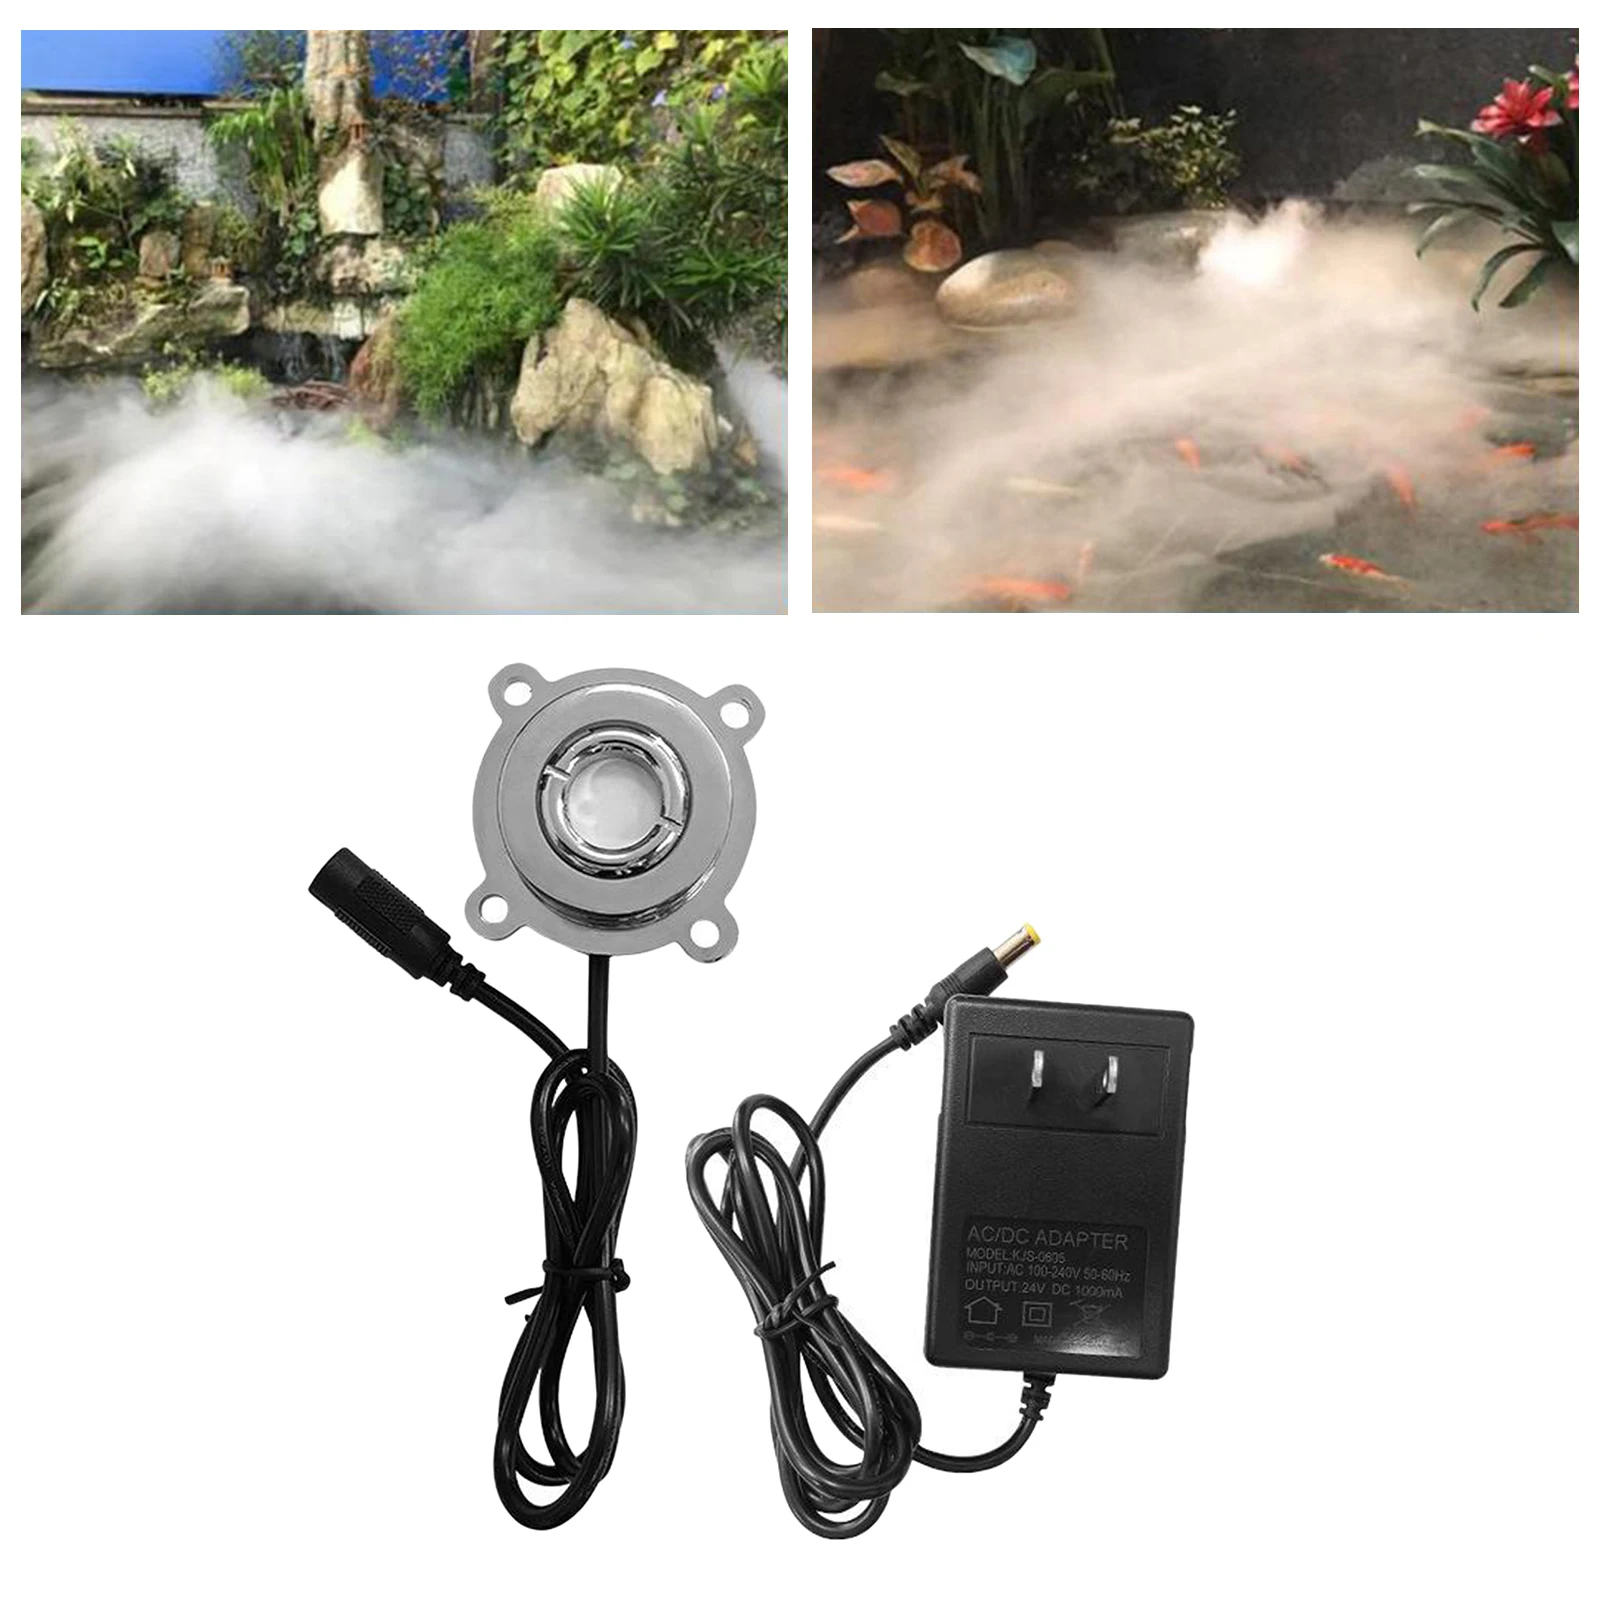 Eu 24V Ultraschall Nebel Hersteller Fogger Wasser Brunnen Teich Rockery Fishtank Vase Birdbath Zerstäuber Luft Befeuchter Nebel Hersteller mit Adapter 